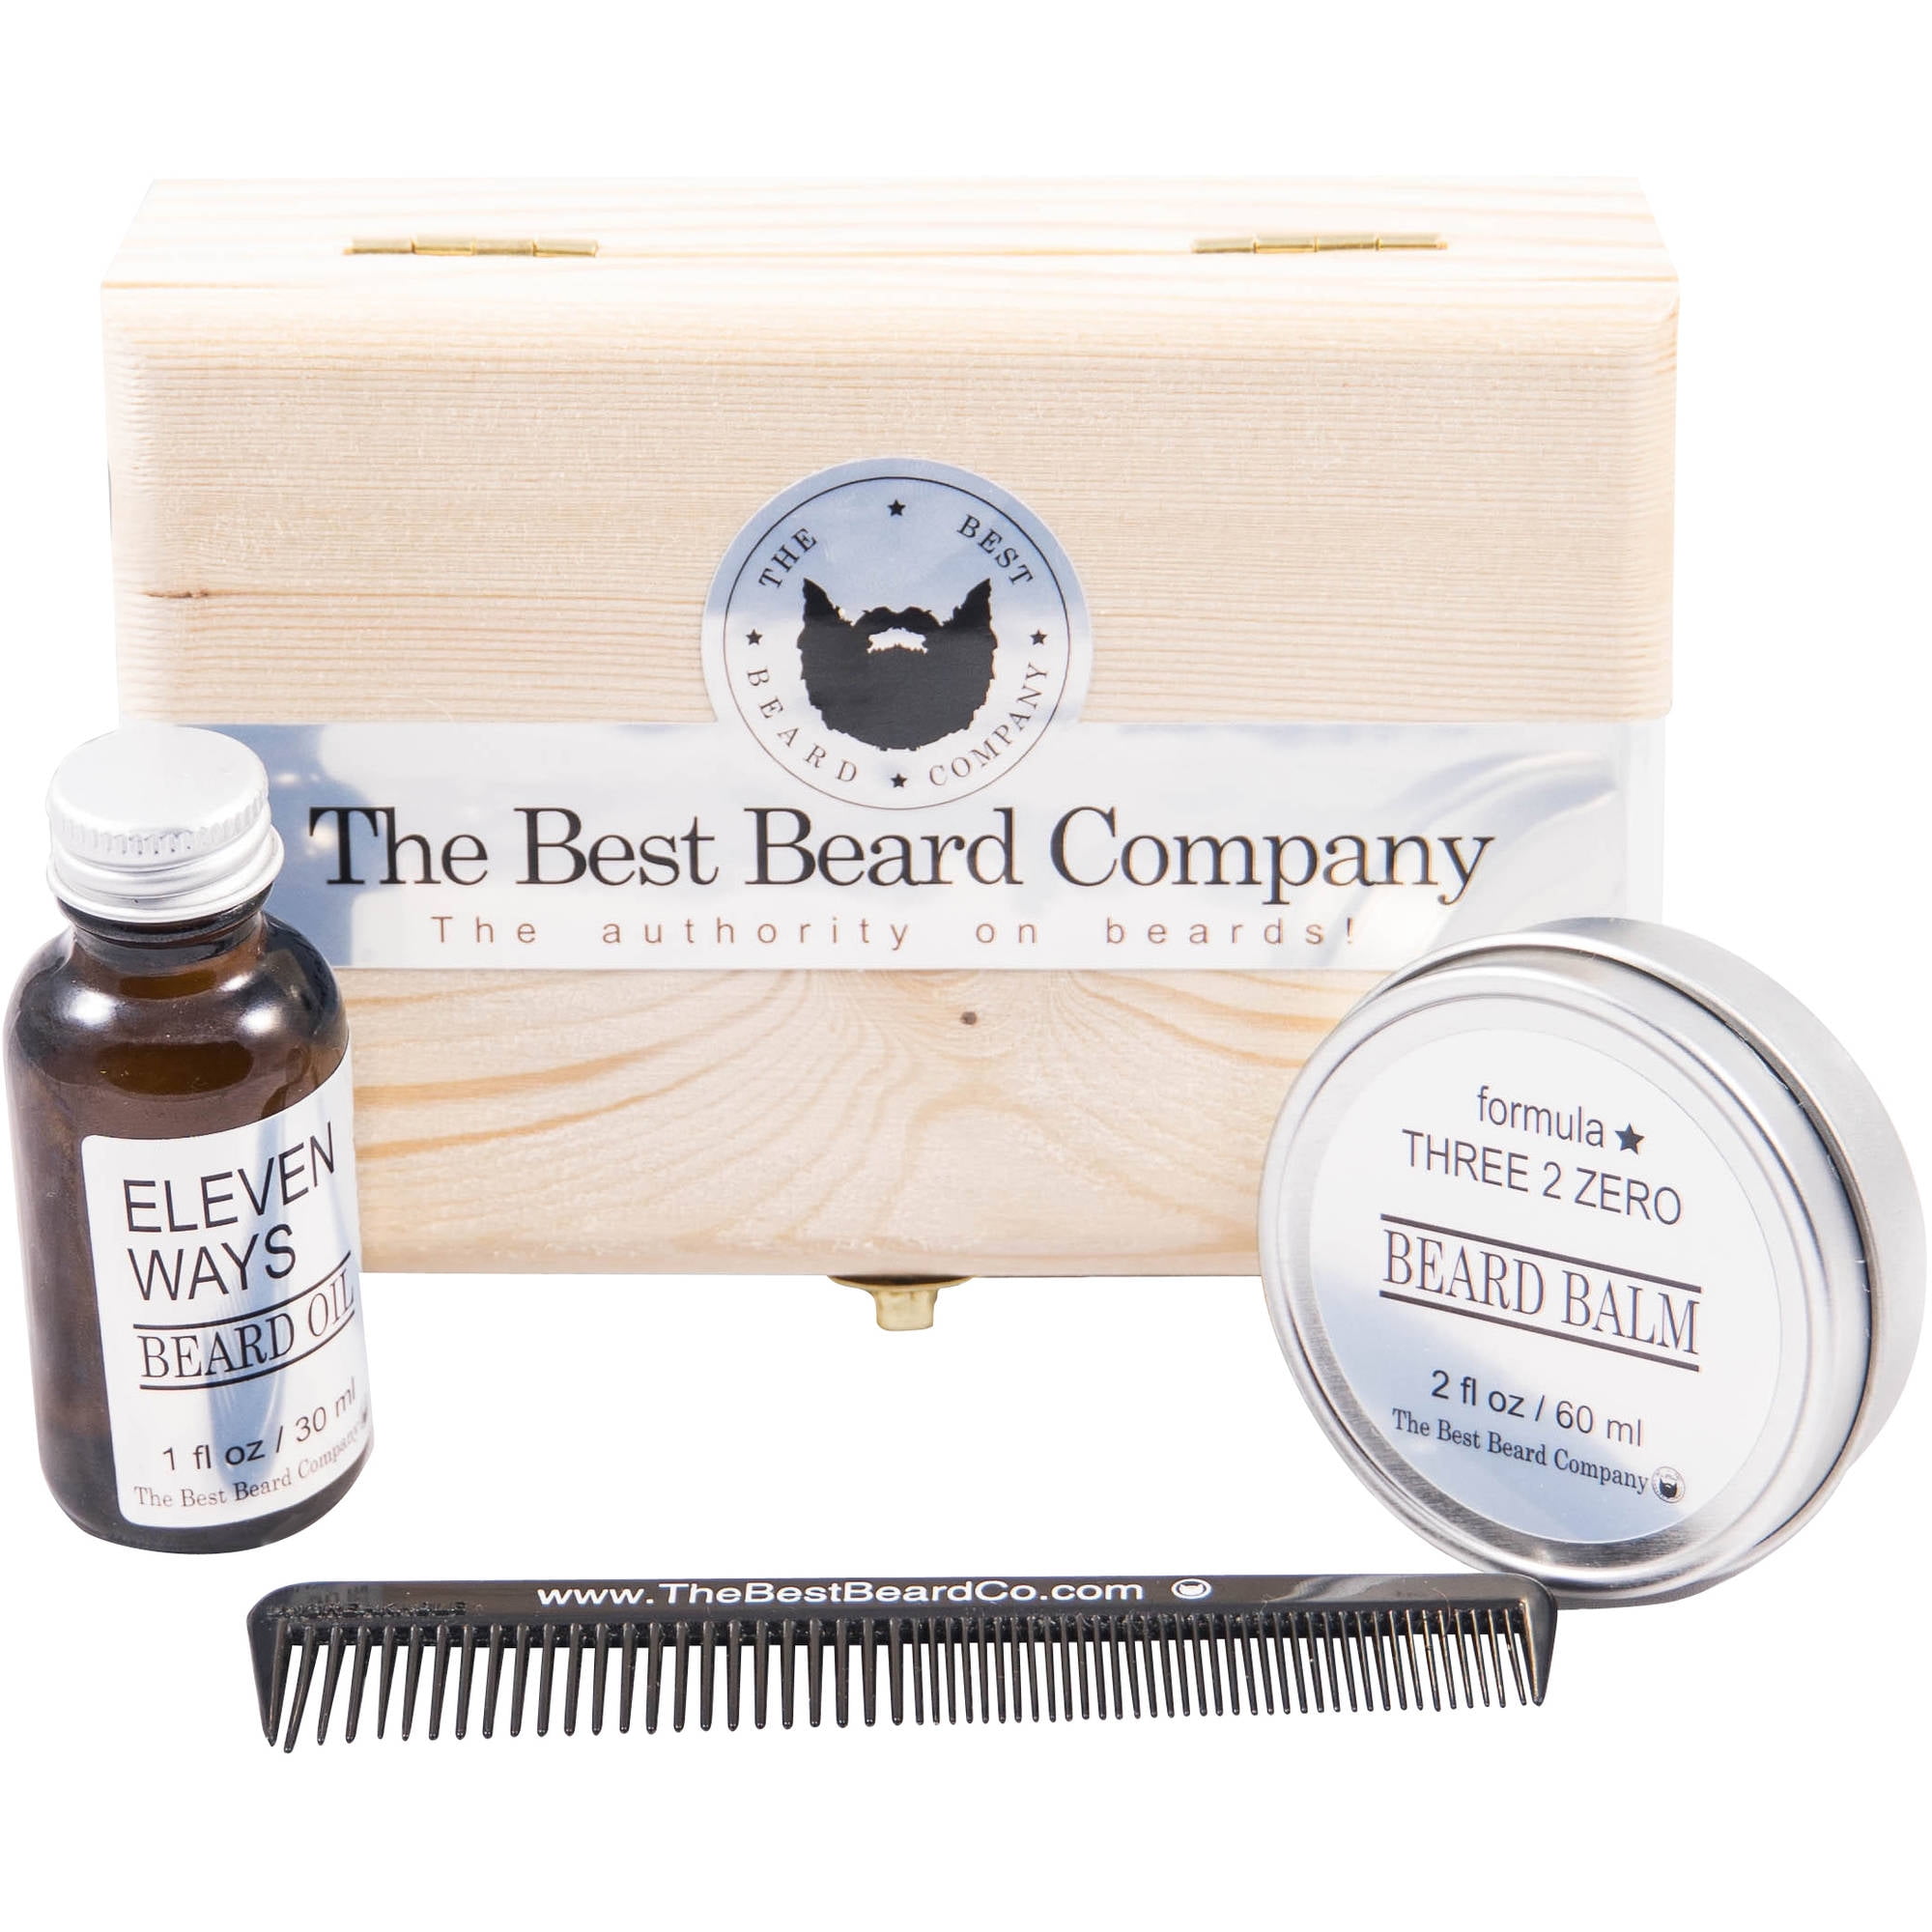 premium beard grooming kit